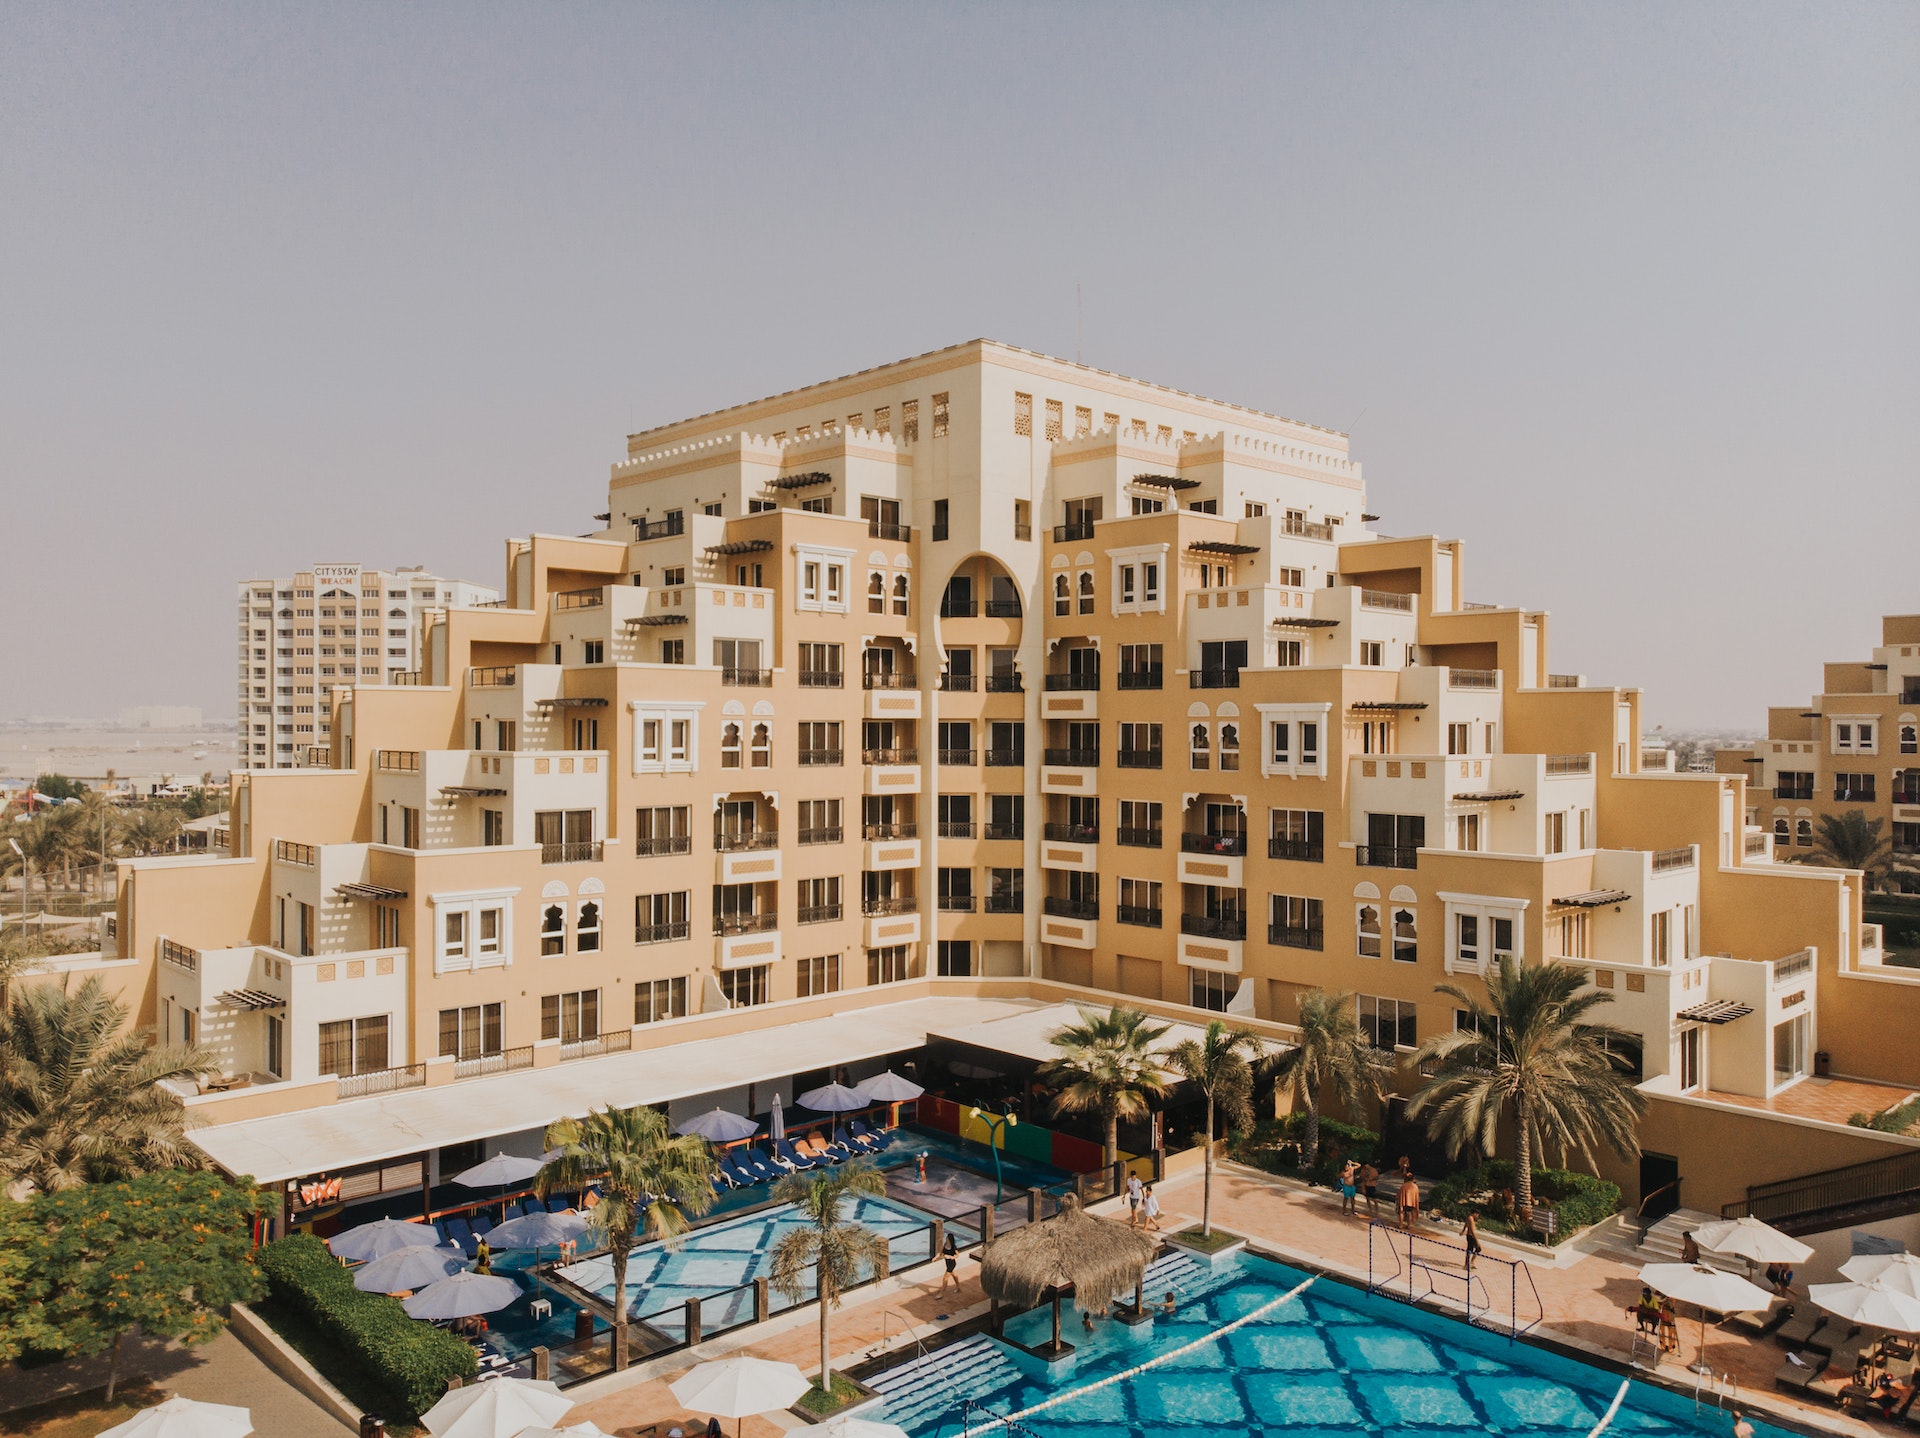 Luxury Hotels In Dubai - Indulge In Opulence